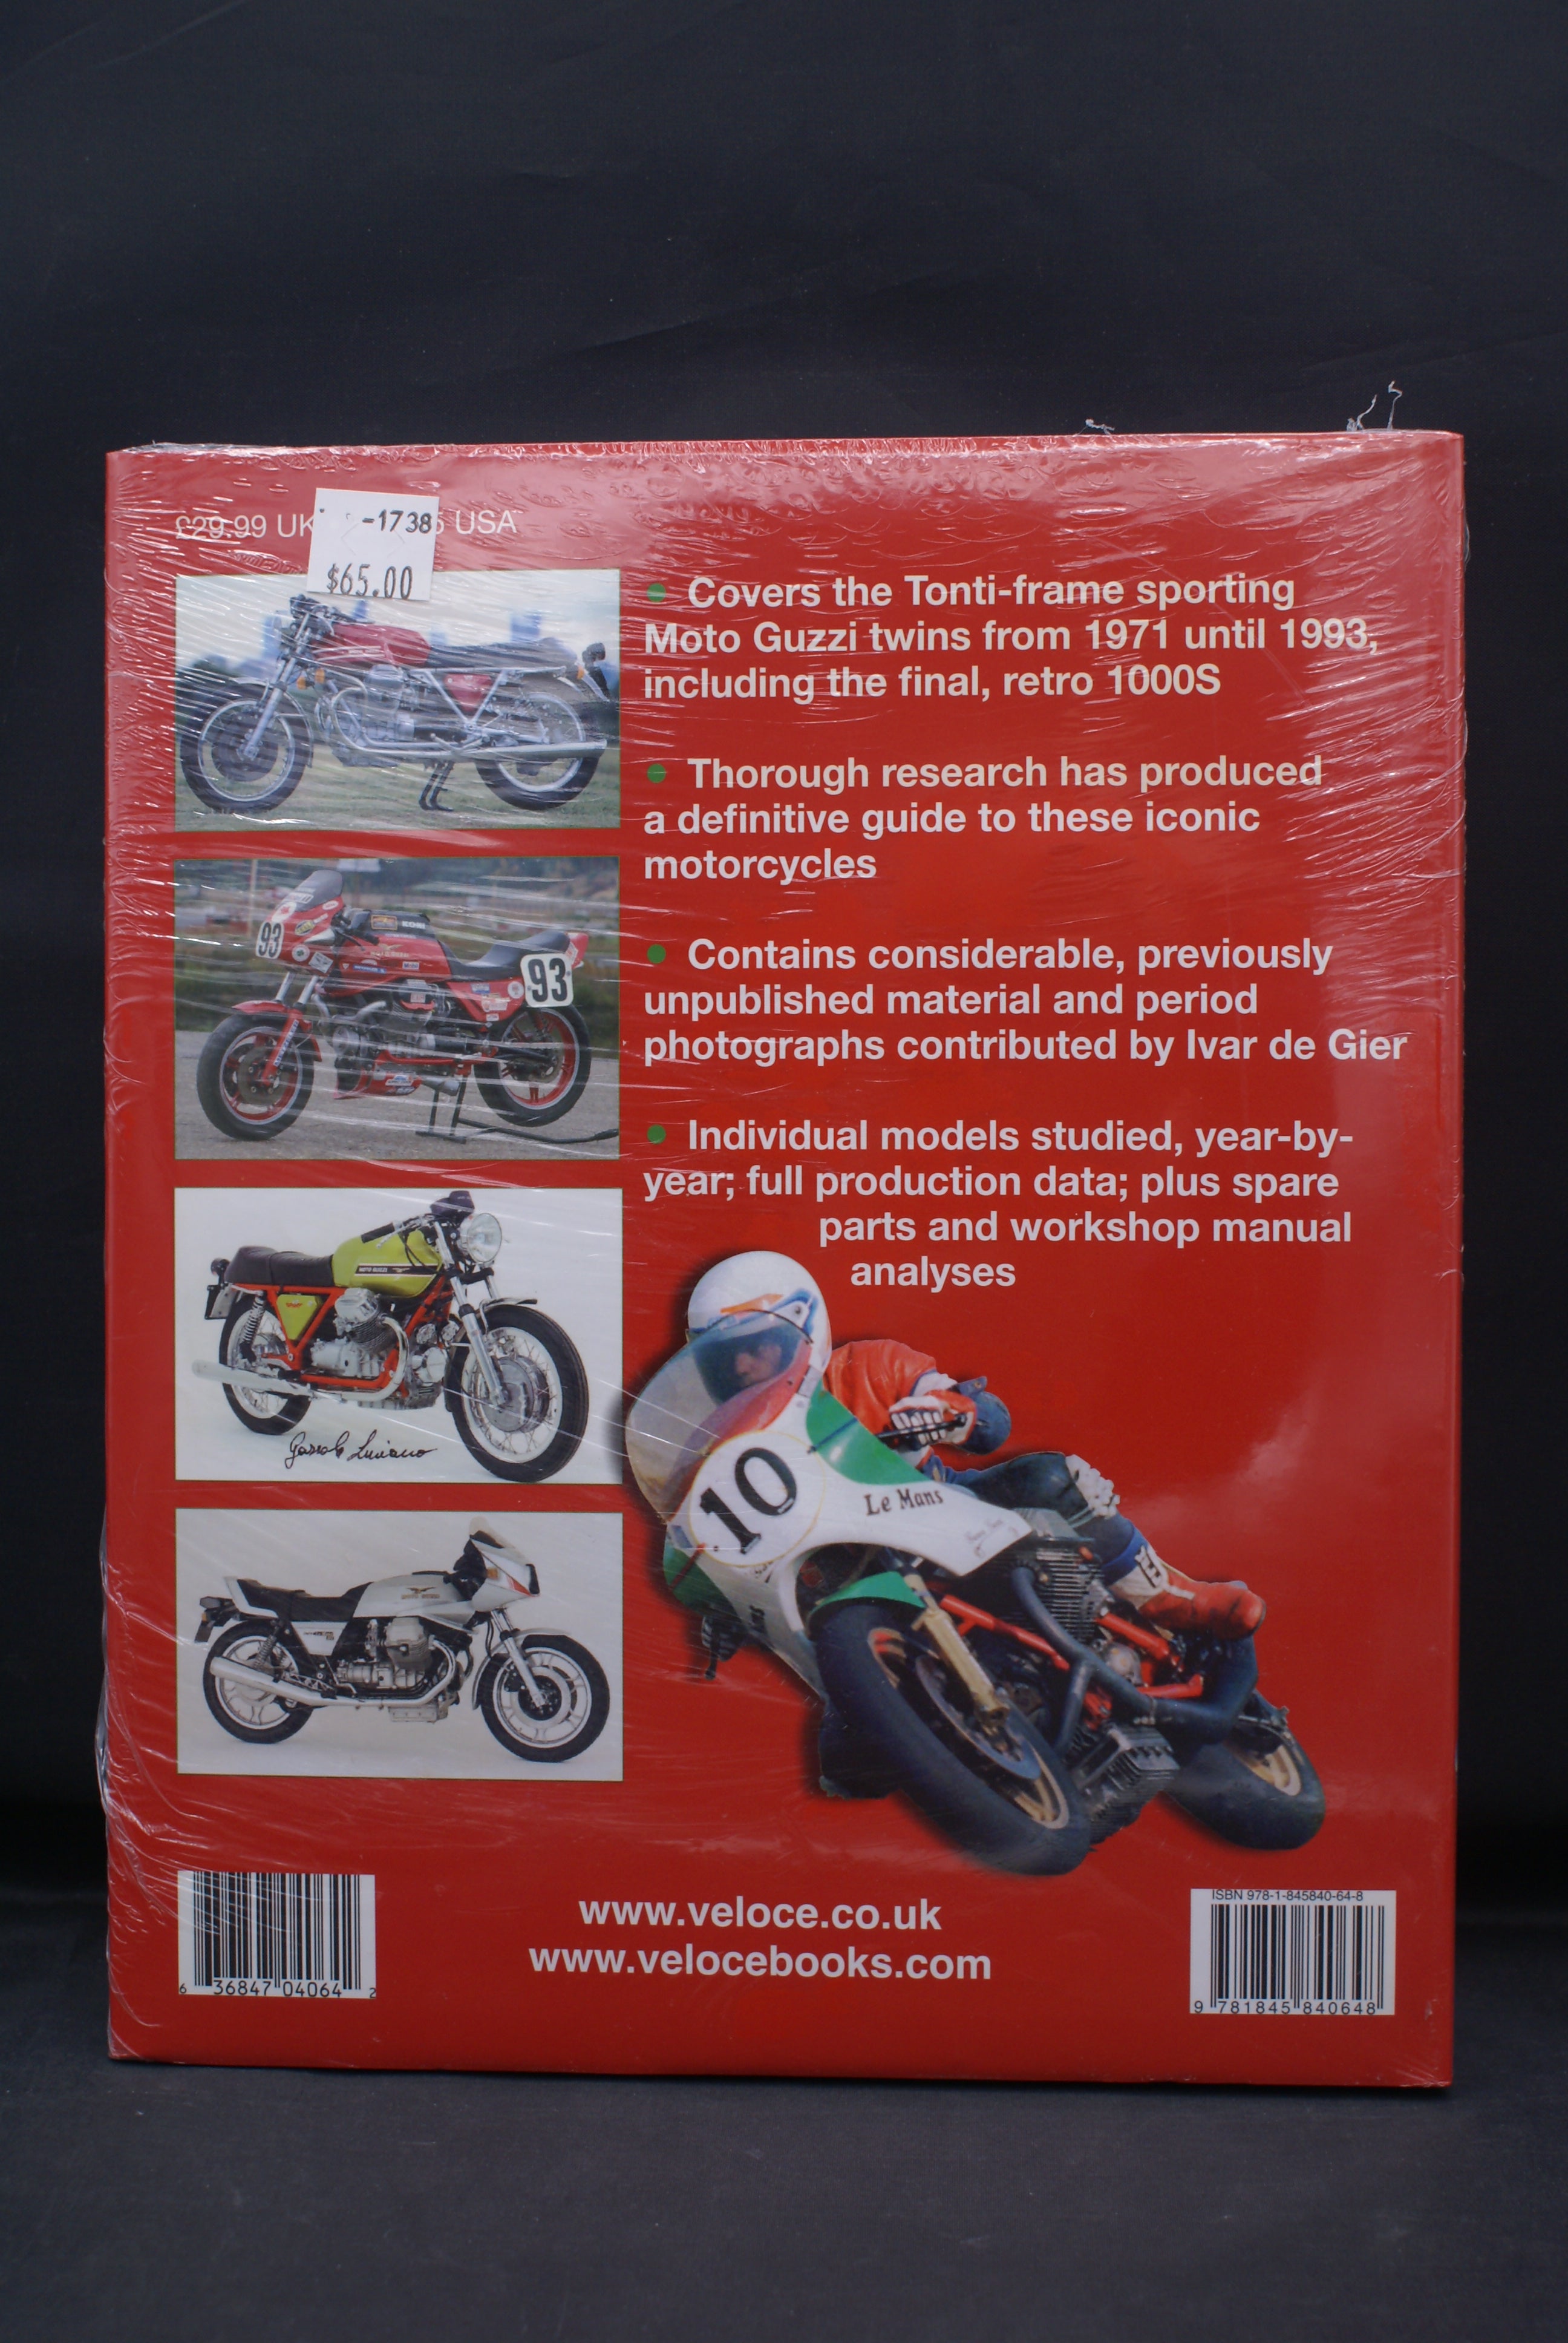 Moto Guzzi, Sport & LE Mans Bible